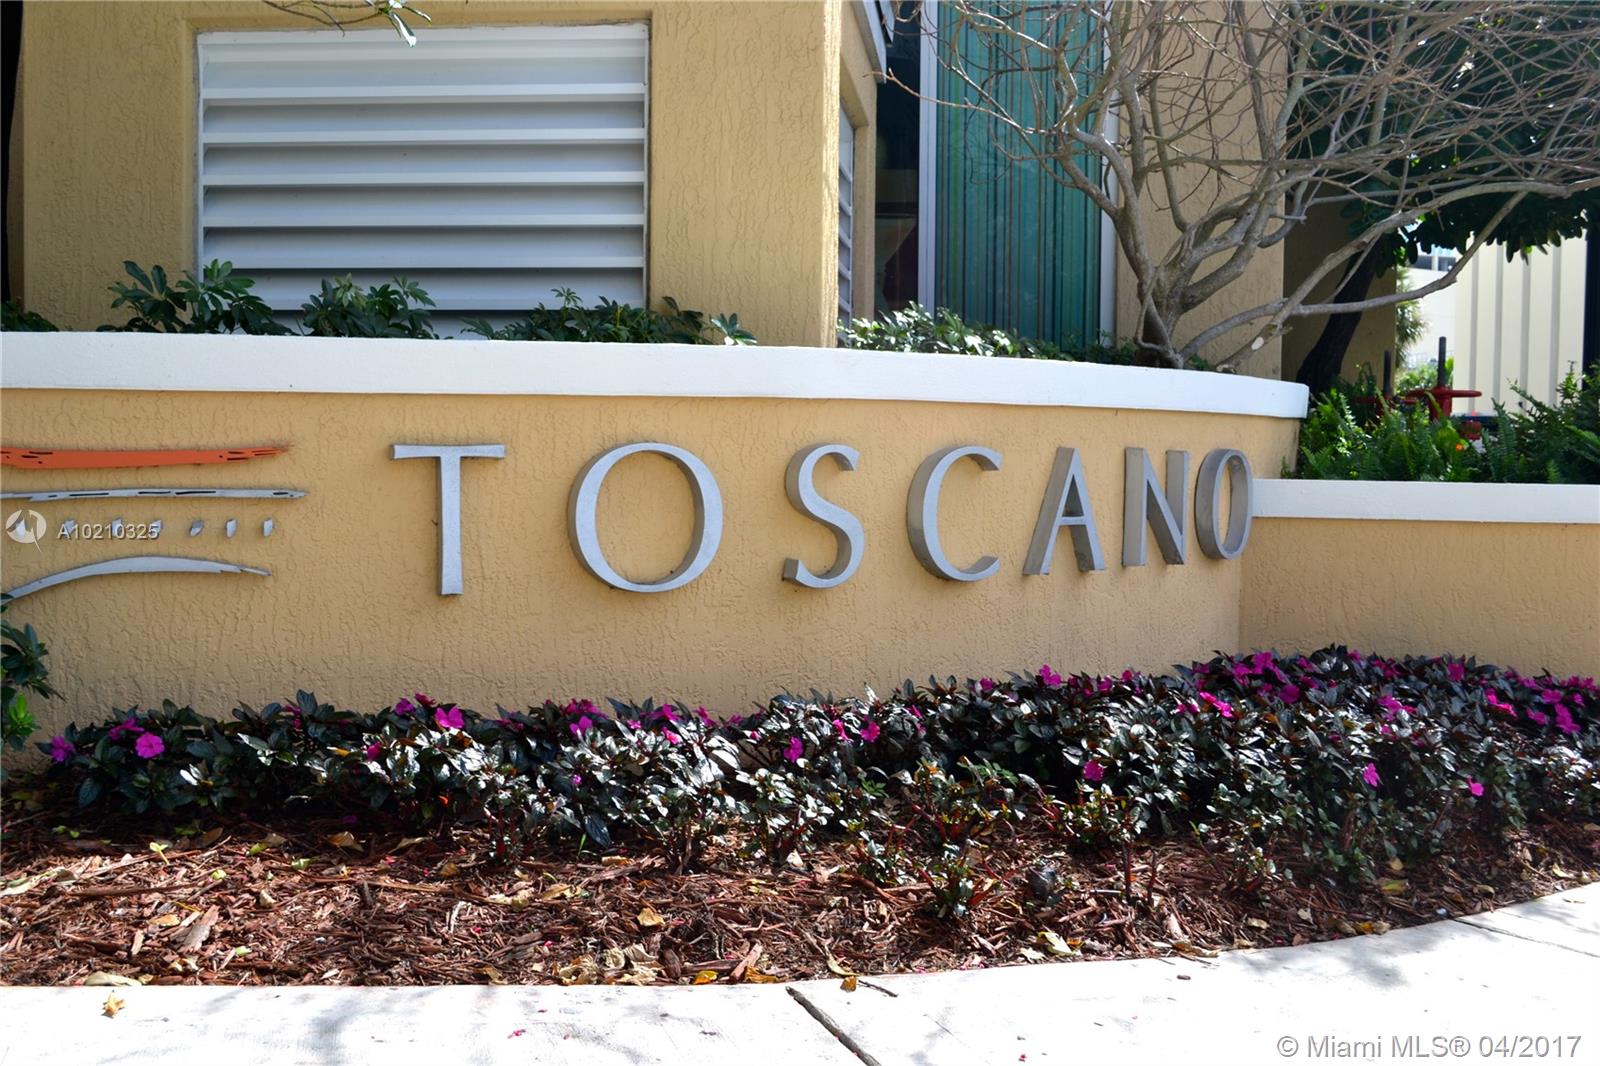 Toscano image #2